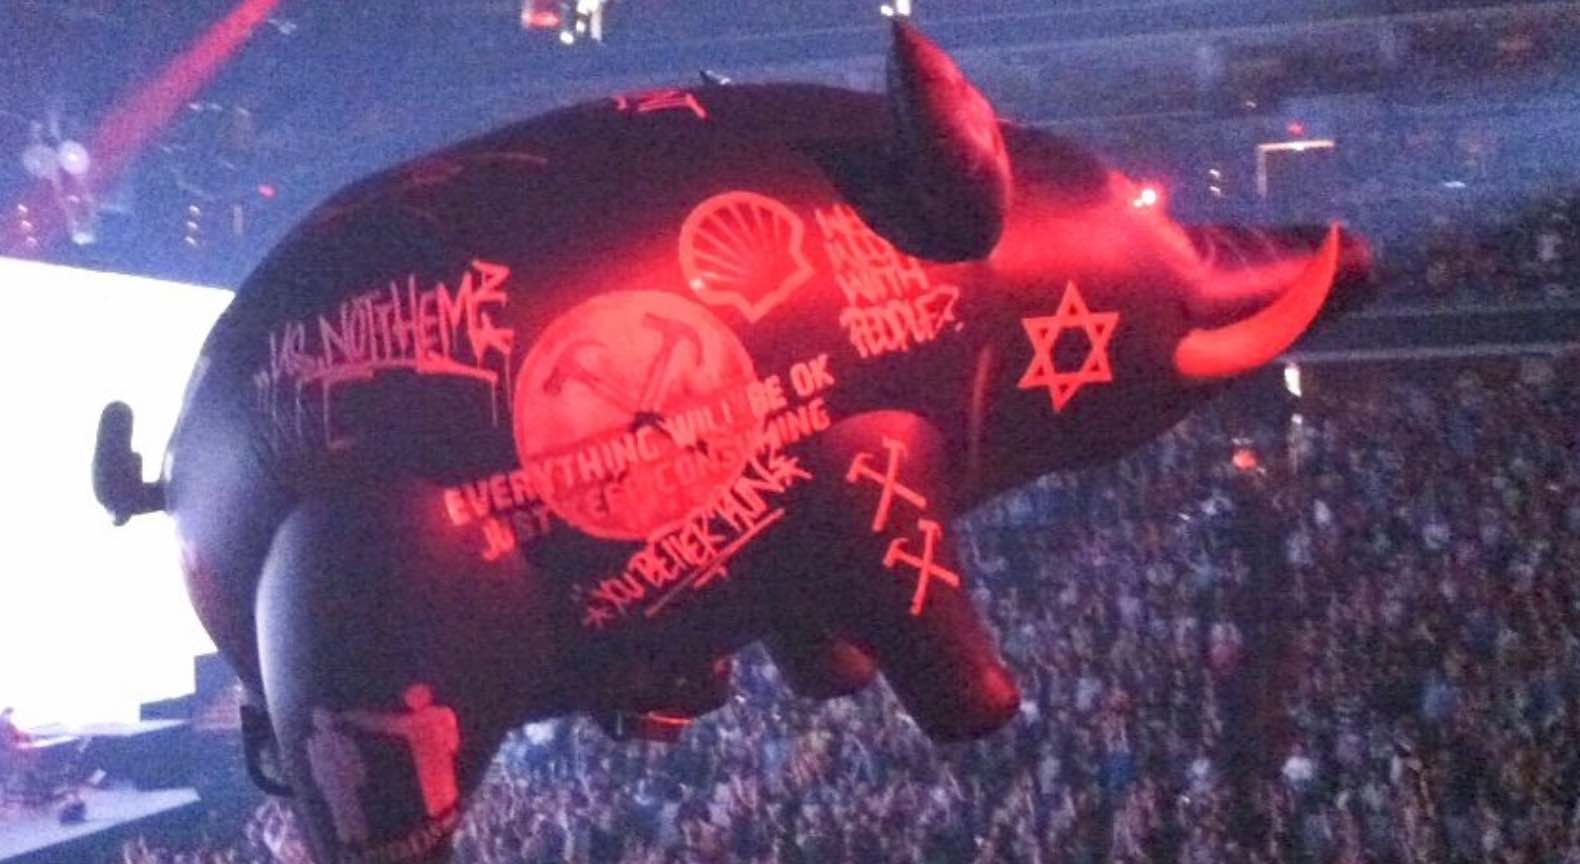 Organización judía lanza boicot contra show de Roger Waters en México